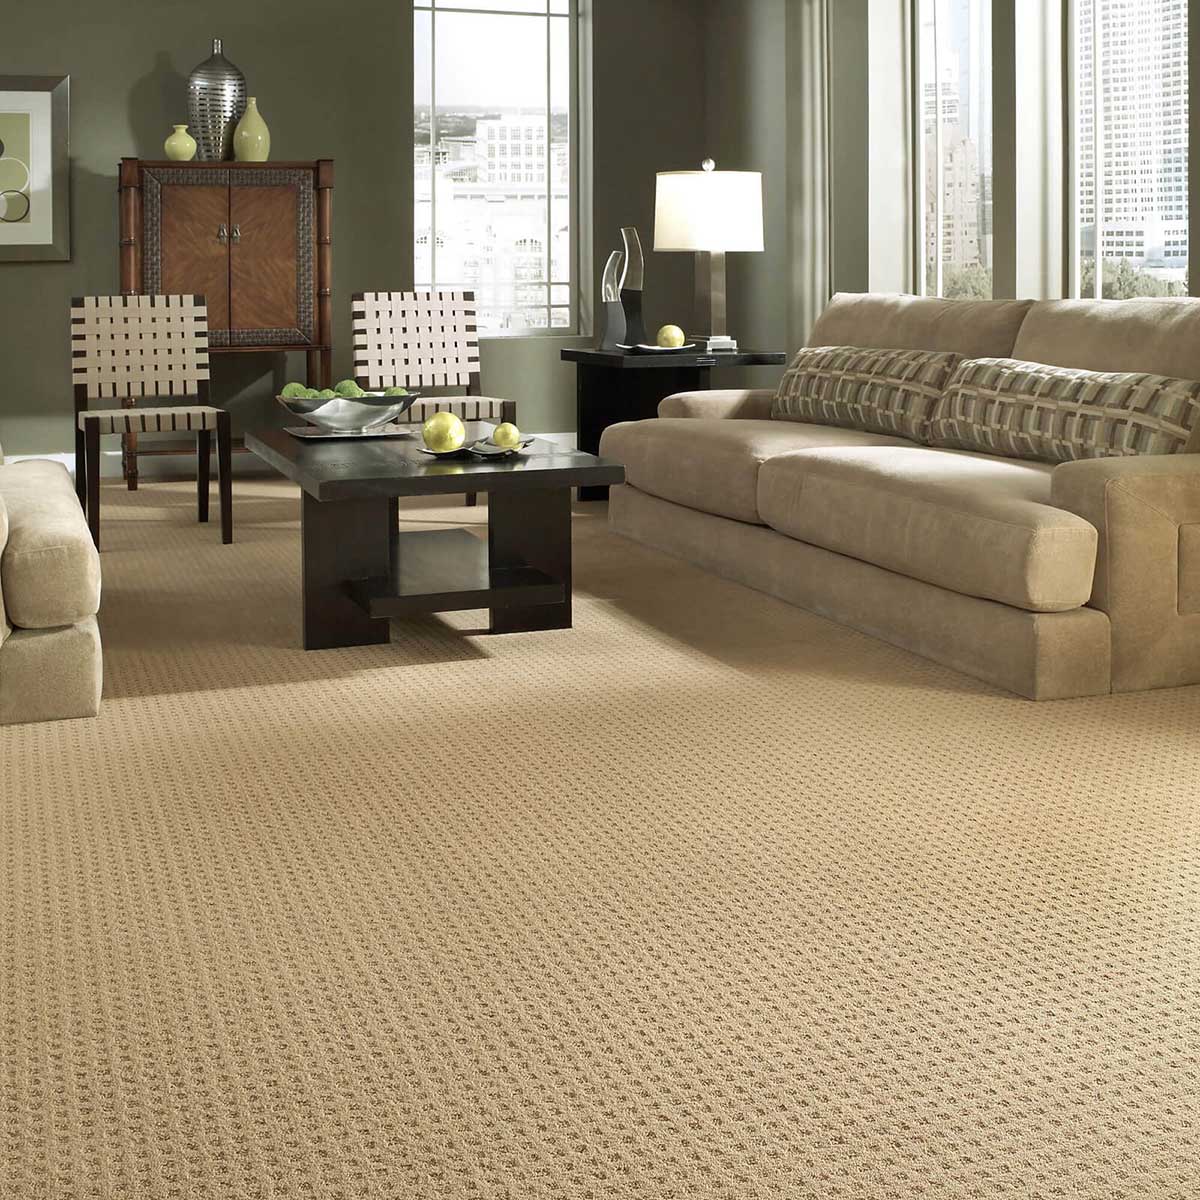 Living room Carpet | CarpetsPlus COLORTILE of Hutchinson